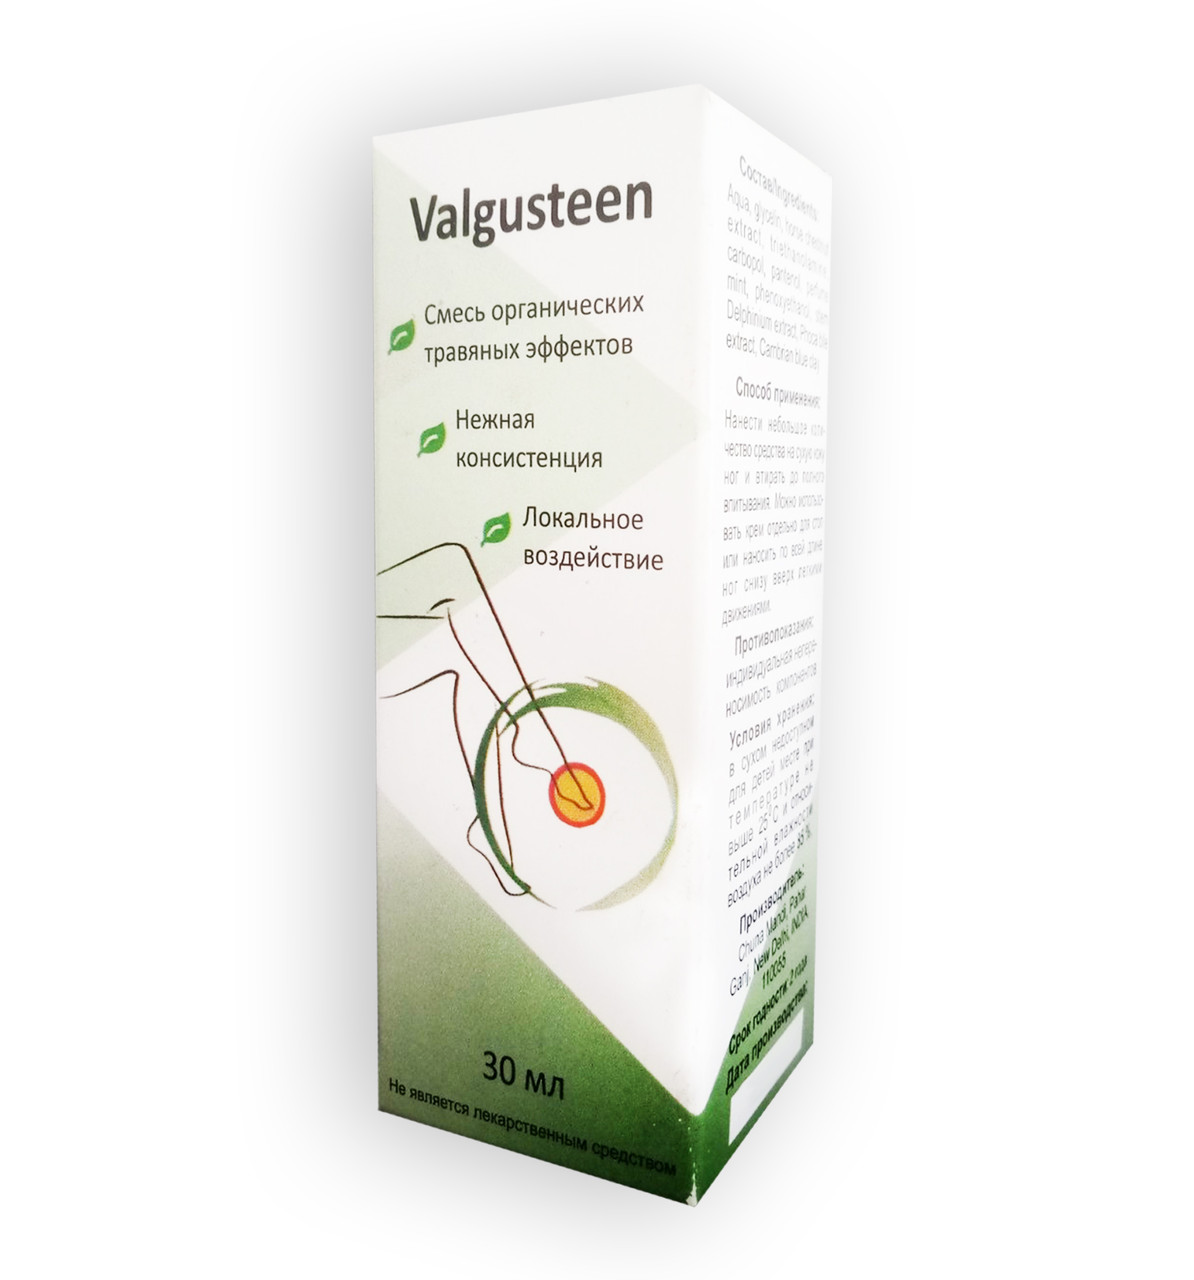 Valgusteen  - Гель від вальгусної деформації стопи (Вальгустін)